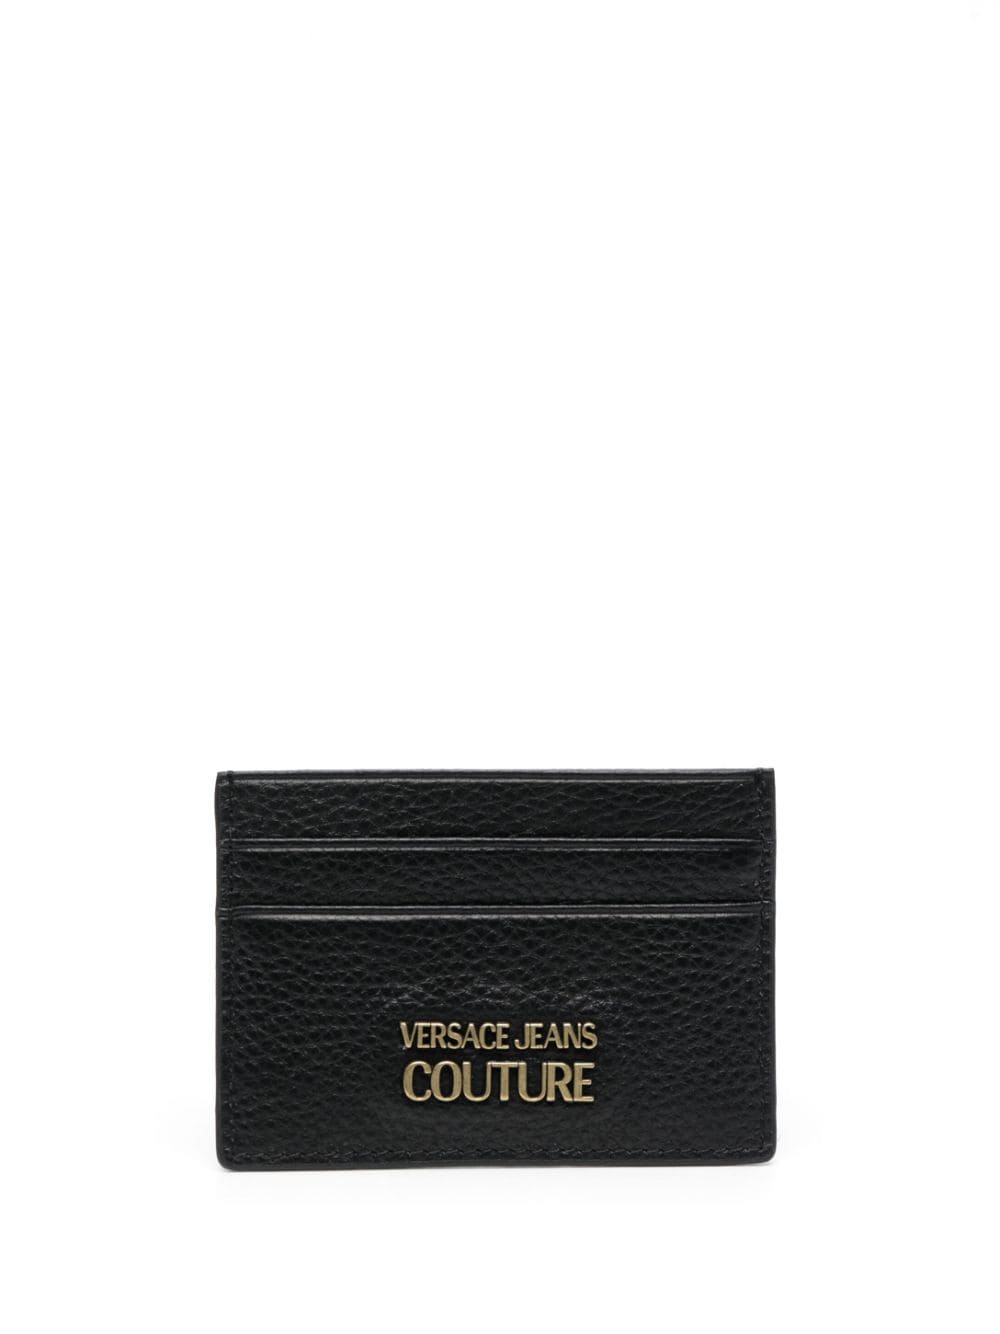 Image 1 of Versace Jeans Couture حامل بطاقات جلد ببروش شعار الماركة